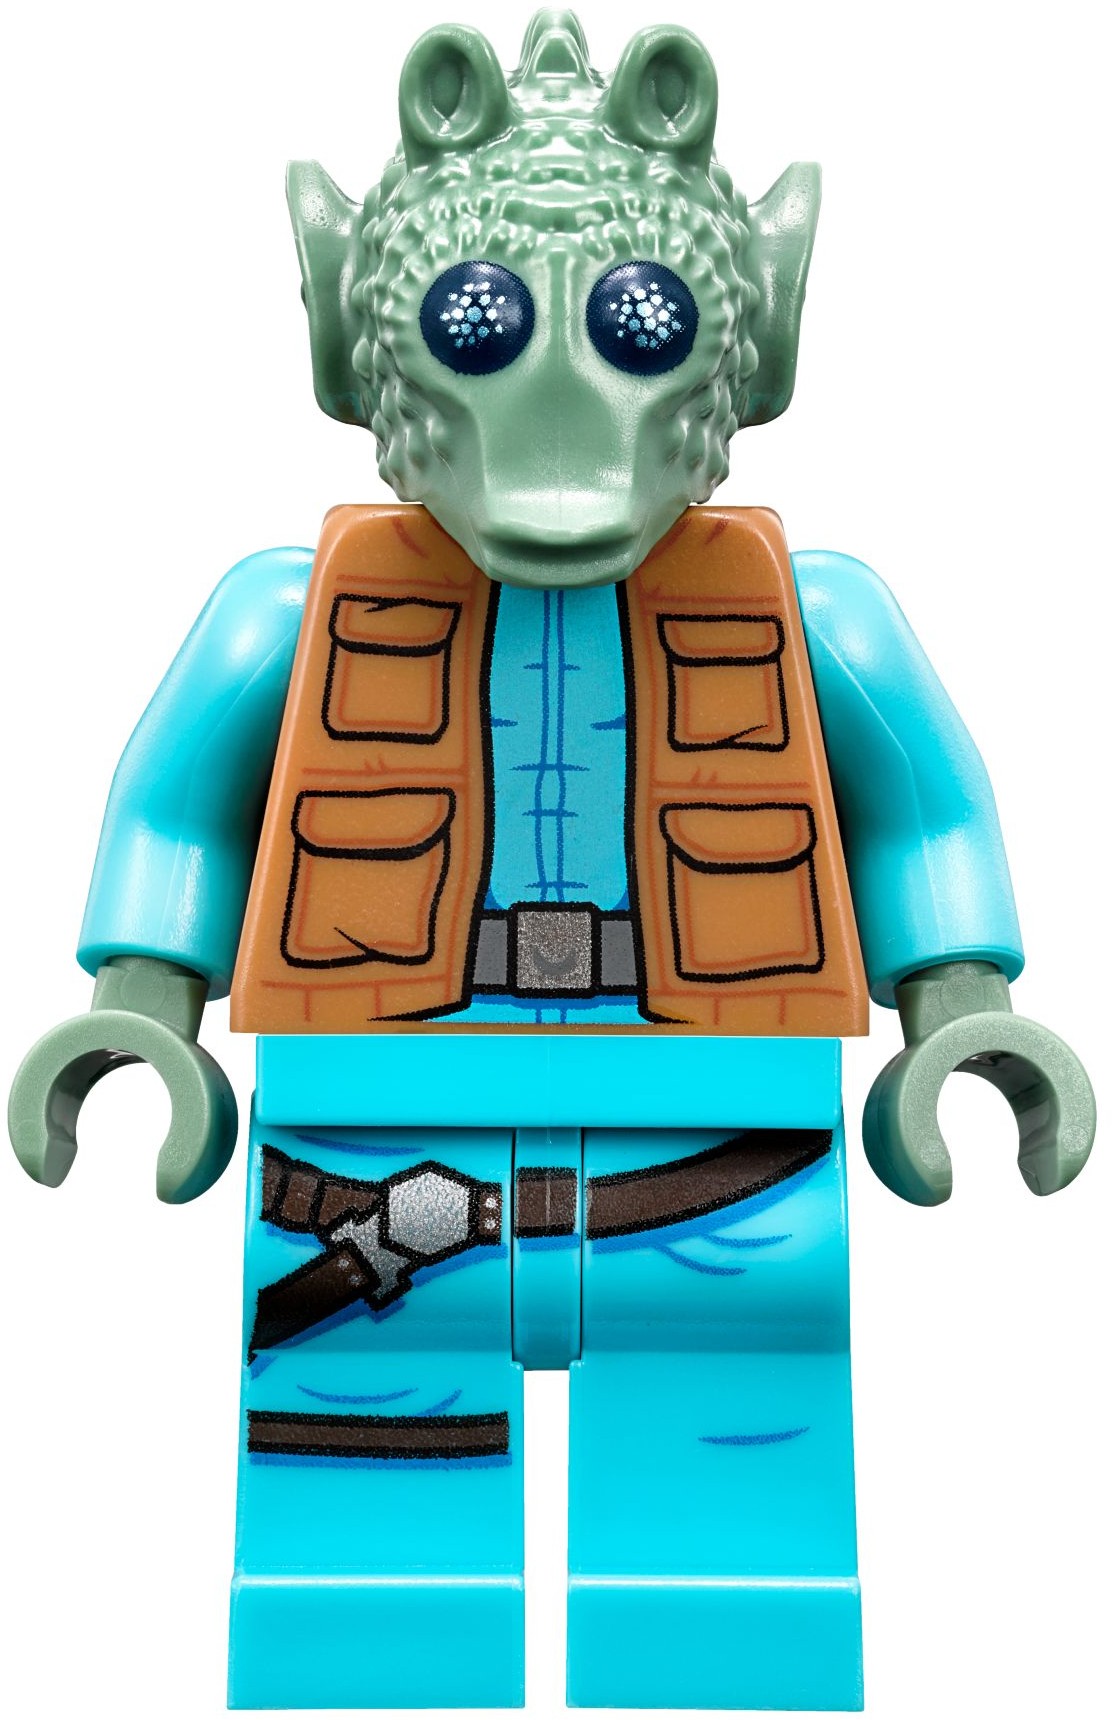 Greedo Lego Star Wars Minifigures 